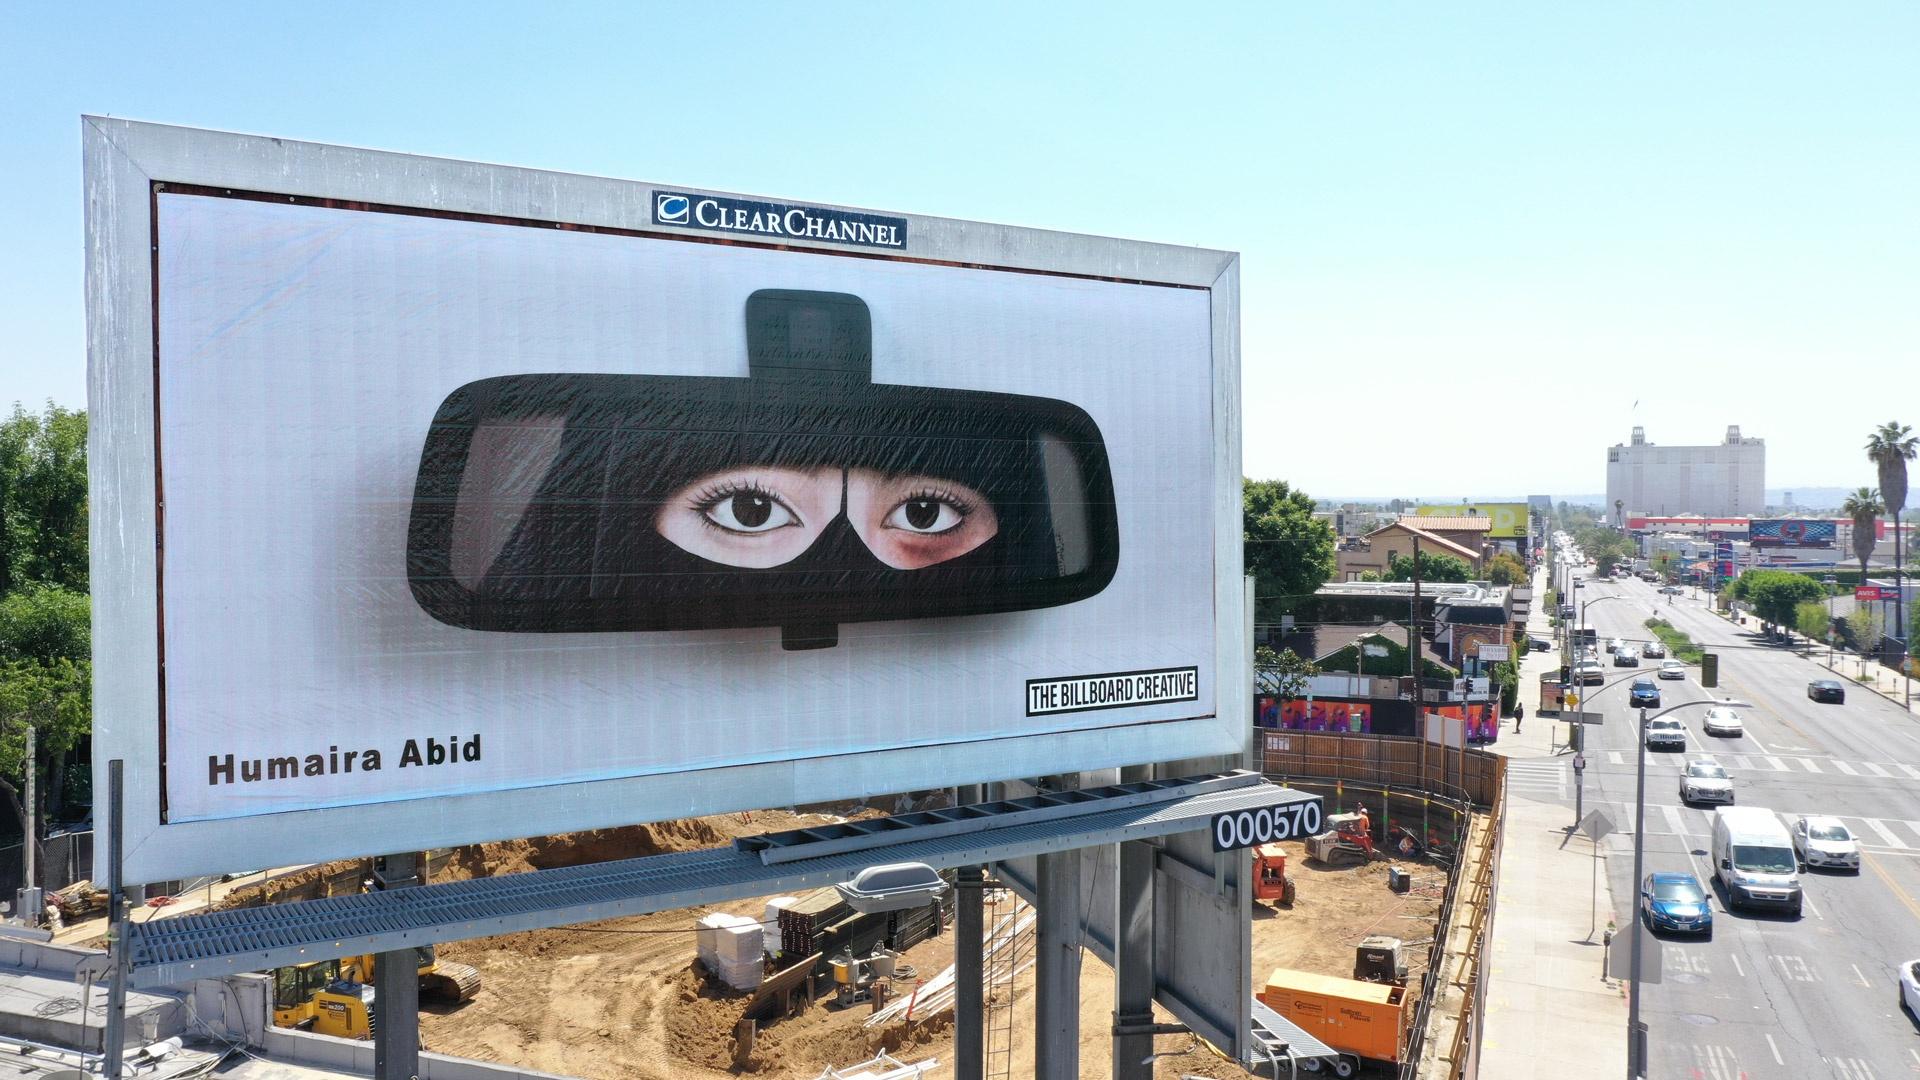 Wonderbra launches the Full Effect, Billboard installer Car…